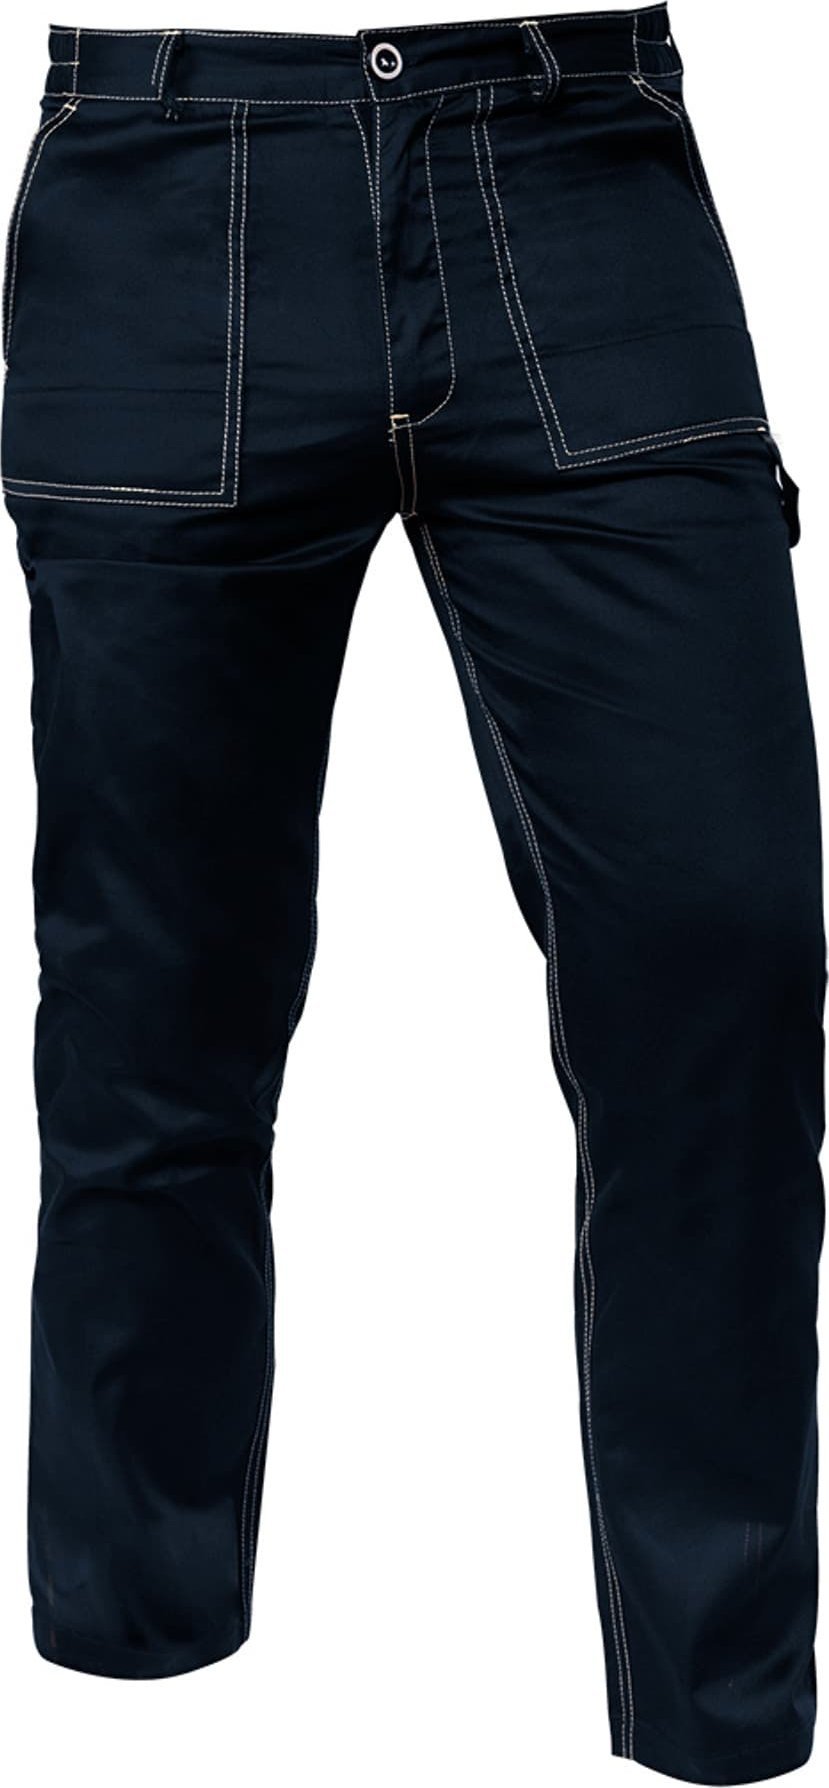 Neo Spodnie robocze (Spodnie robocze, rozmiar L) 81-451-L (5907558486001)